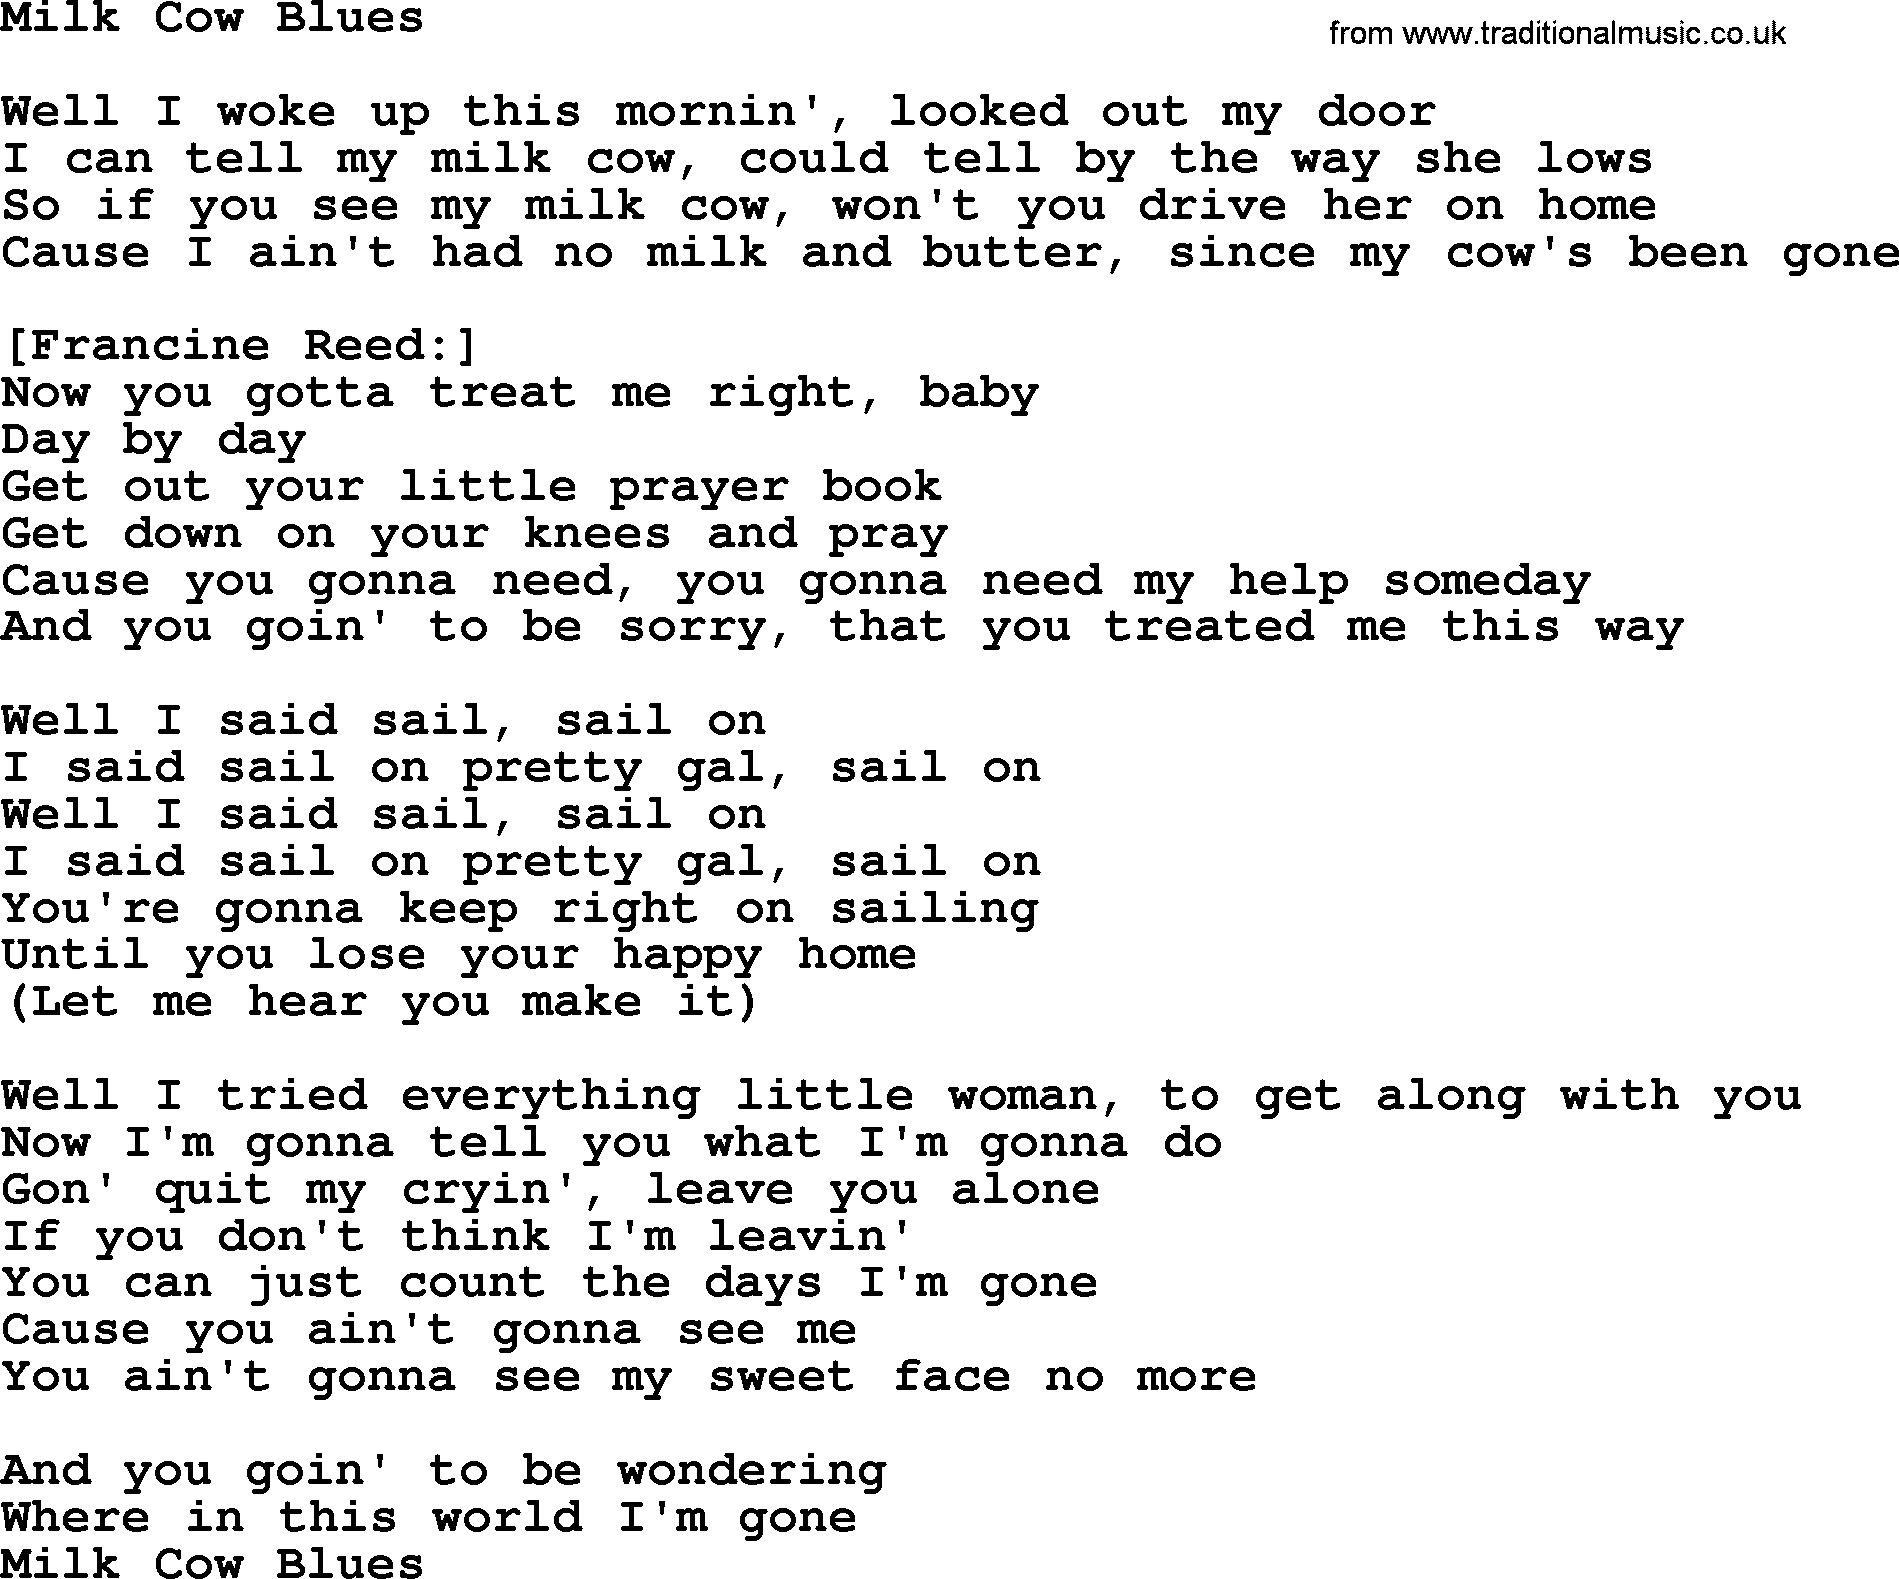 Willie Nelson song: Milk Cow Blues lyrics